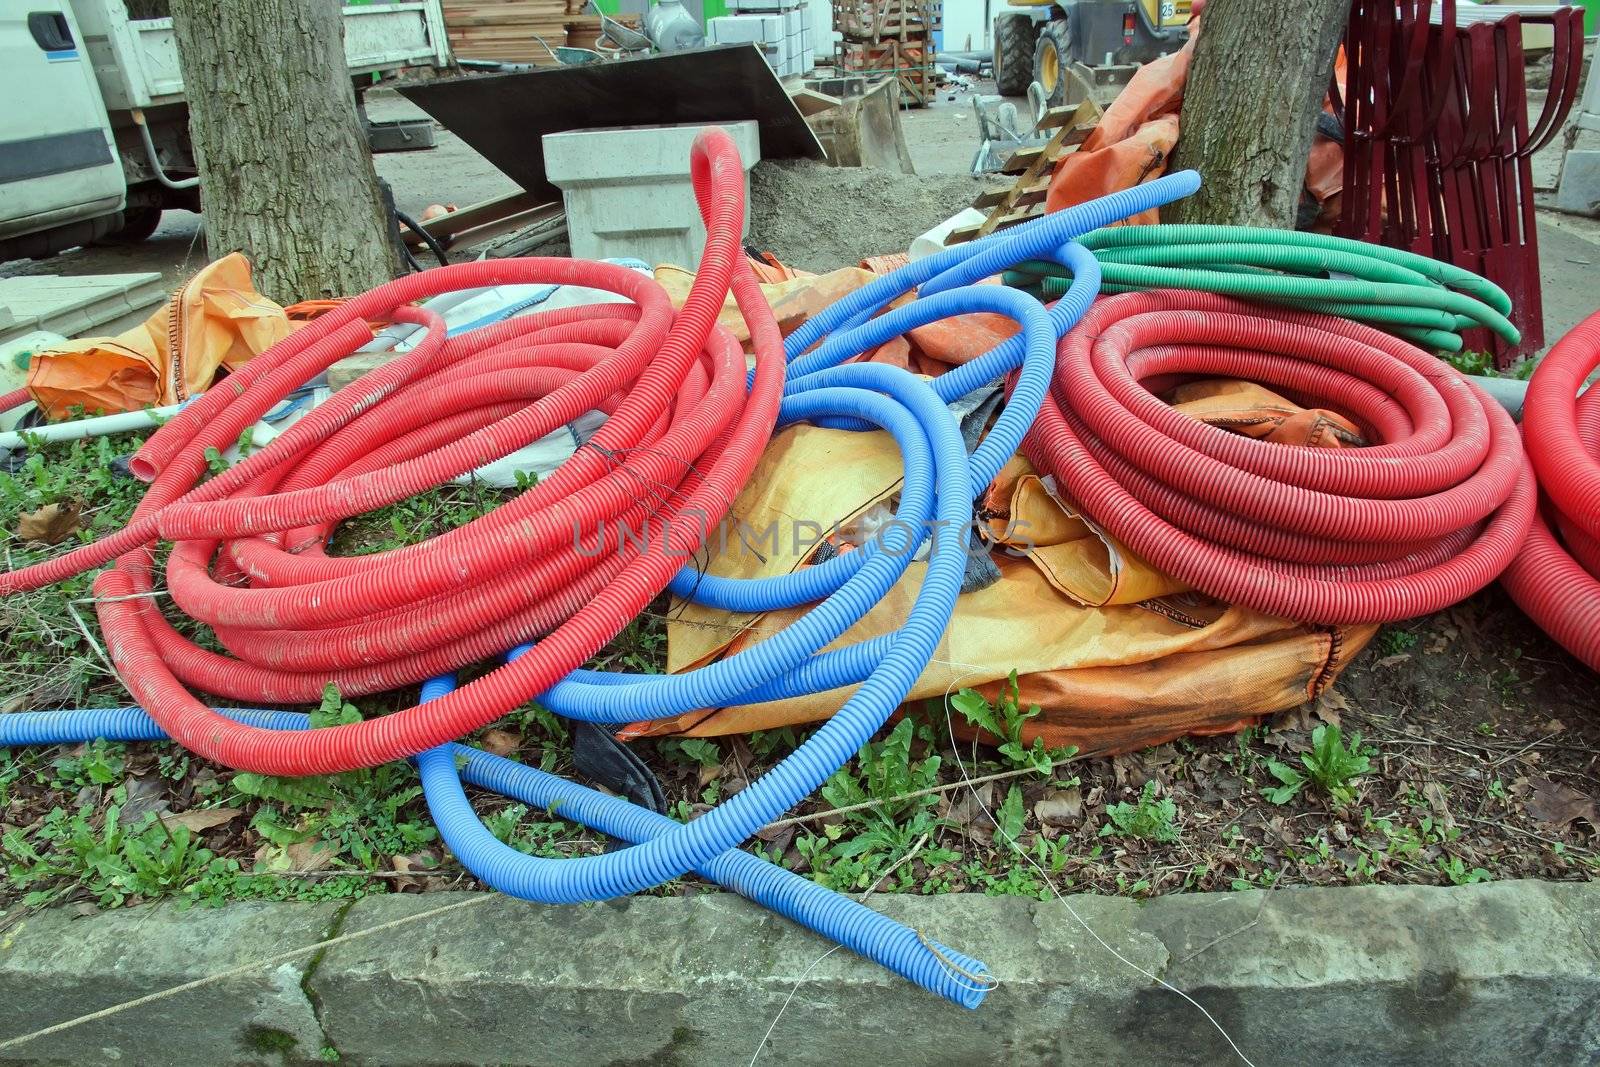 Stock of plastic pipes by neko92vl